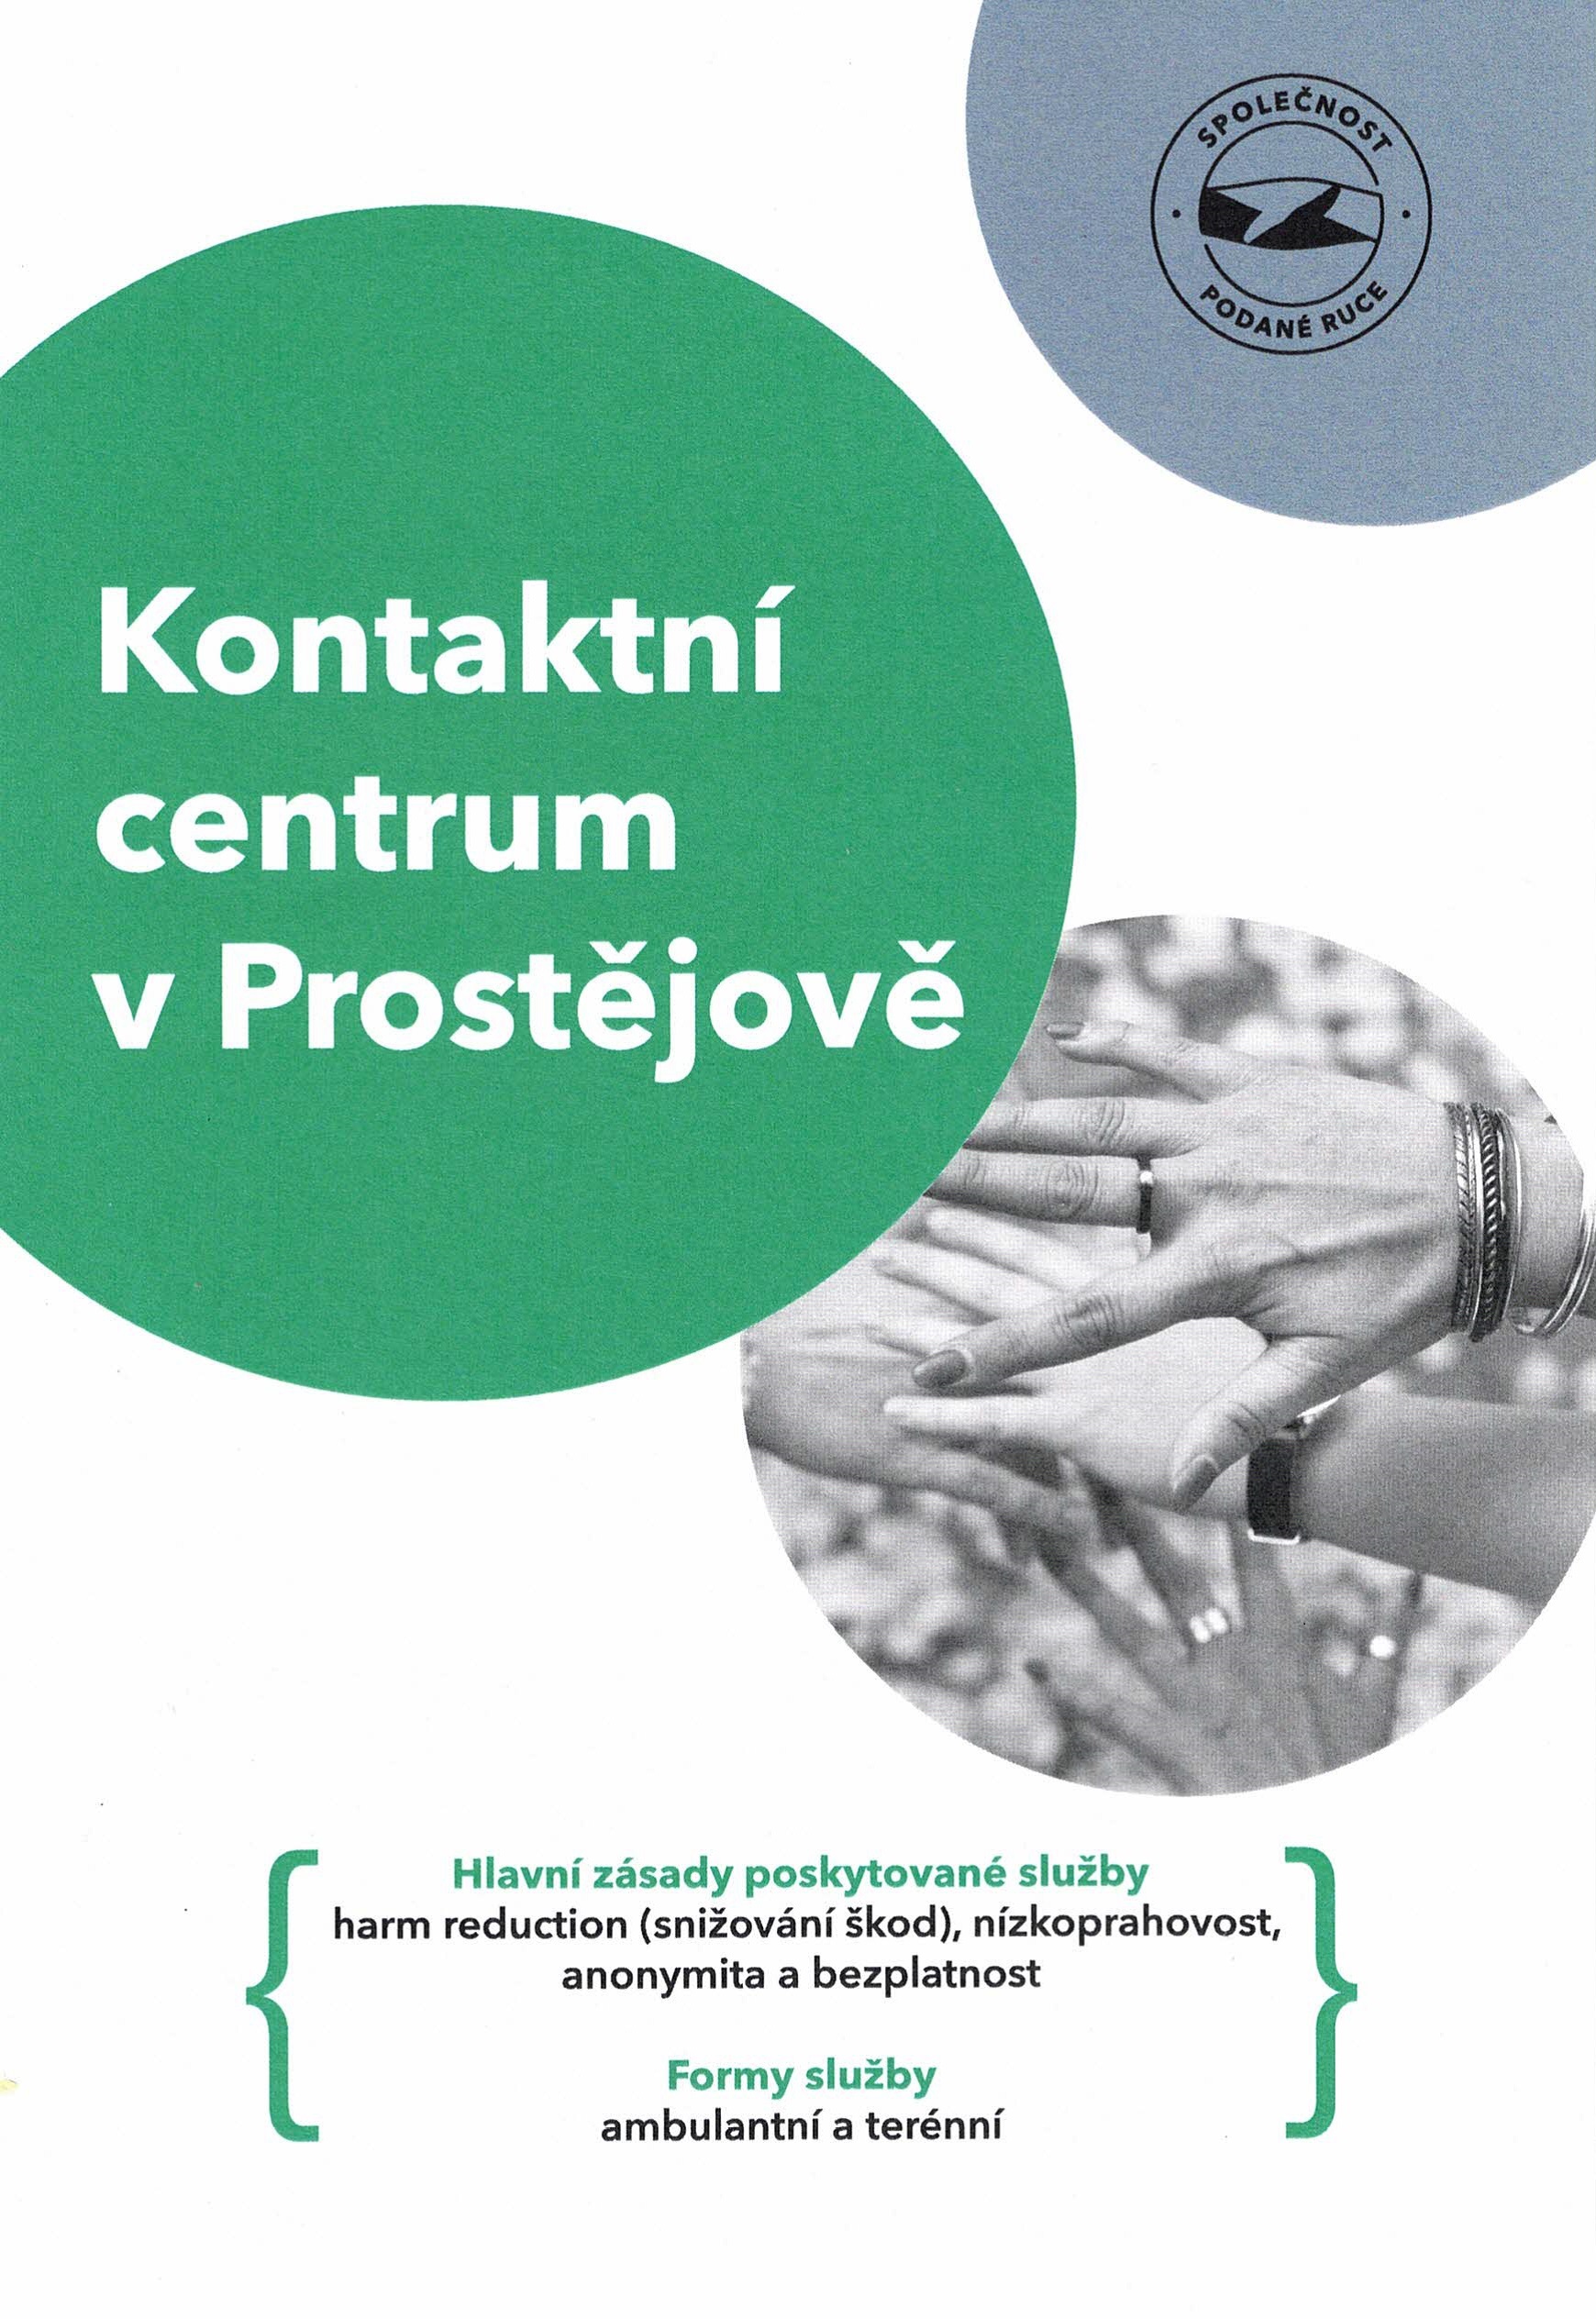 Featured image for “Podané ruce na Švehlovce”